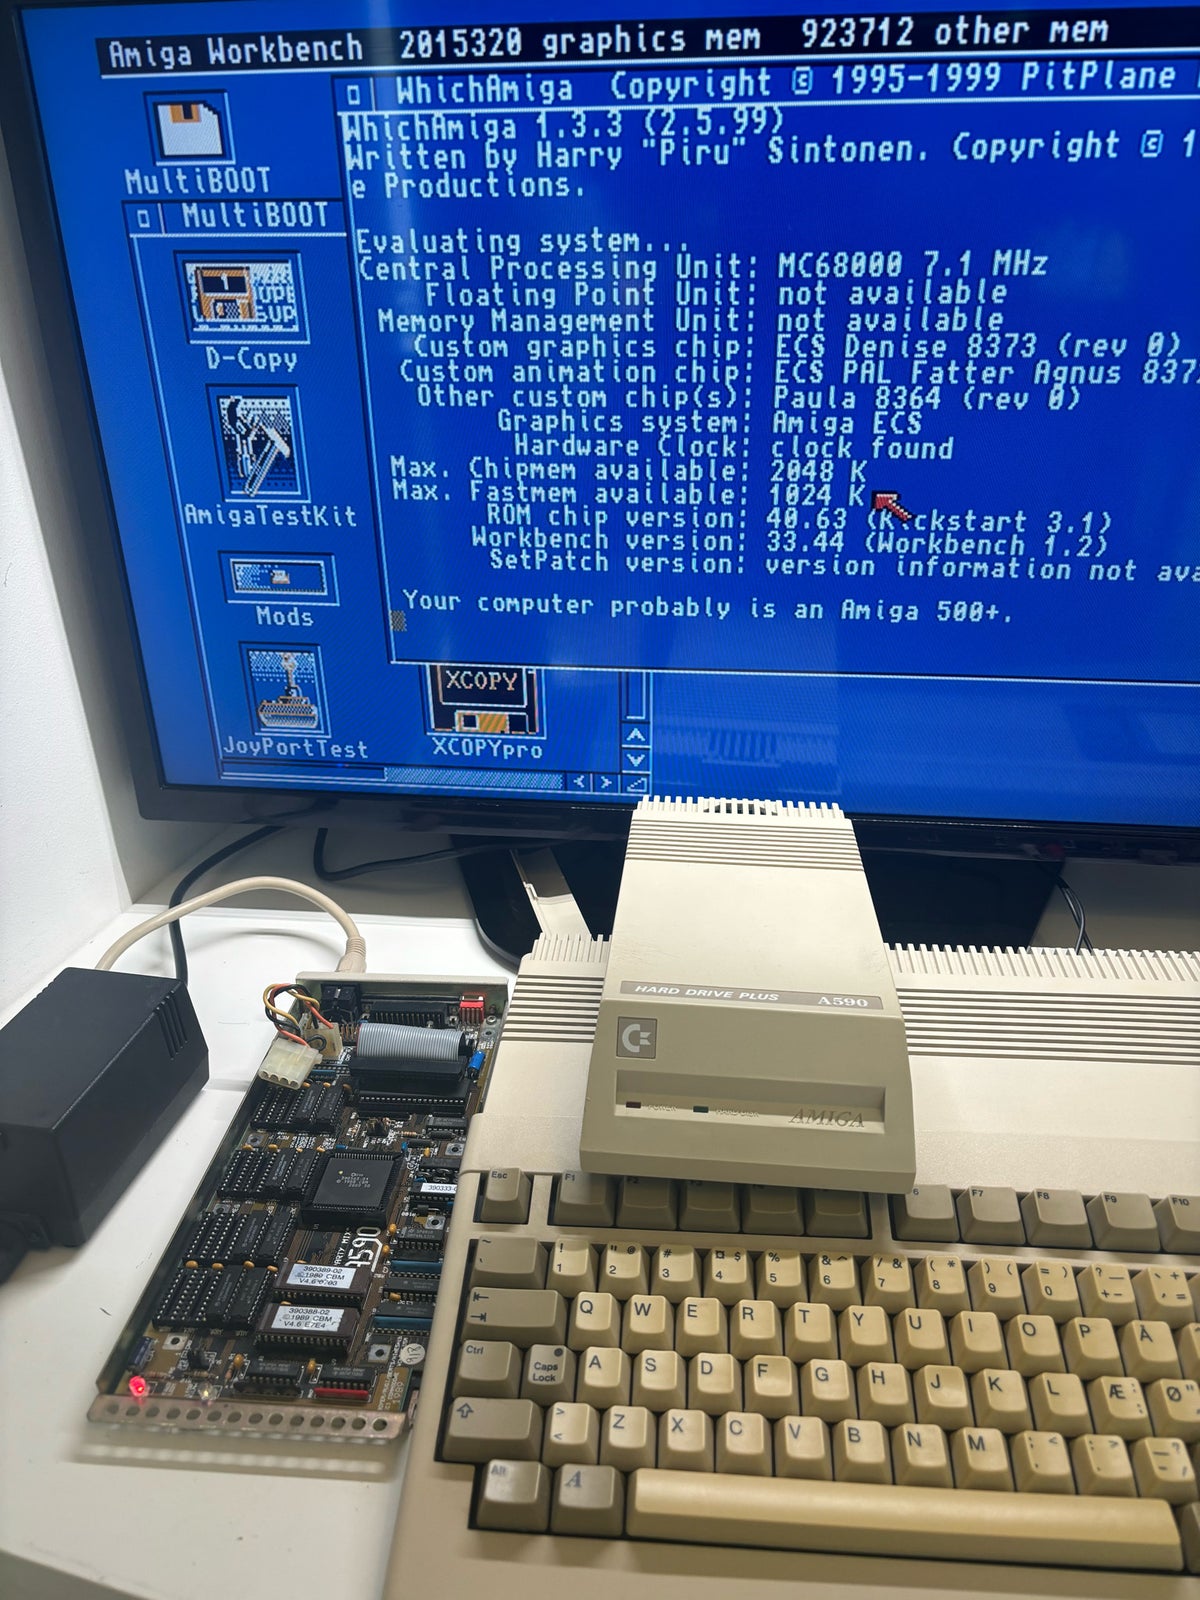 Commodore Amiga A590 Hard Disk Plus XT20MB , spillekonsol